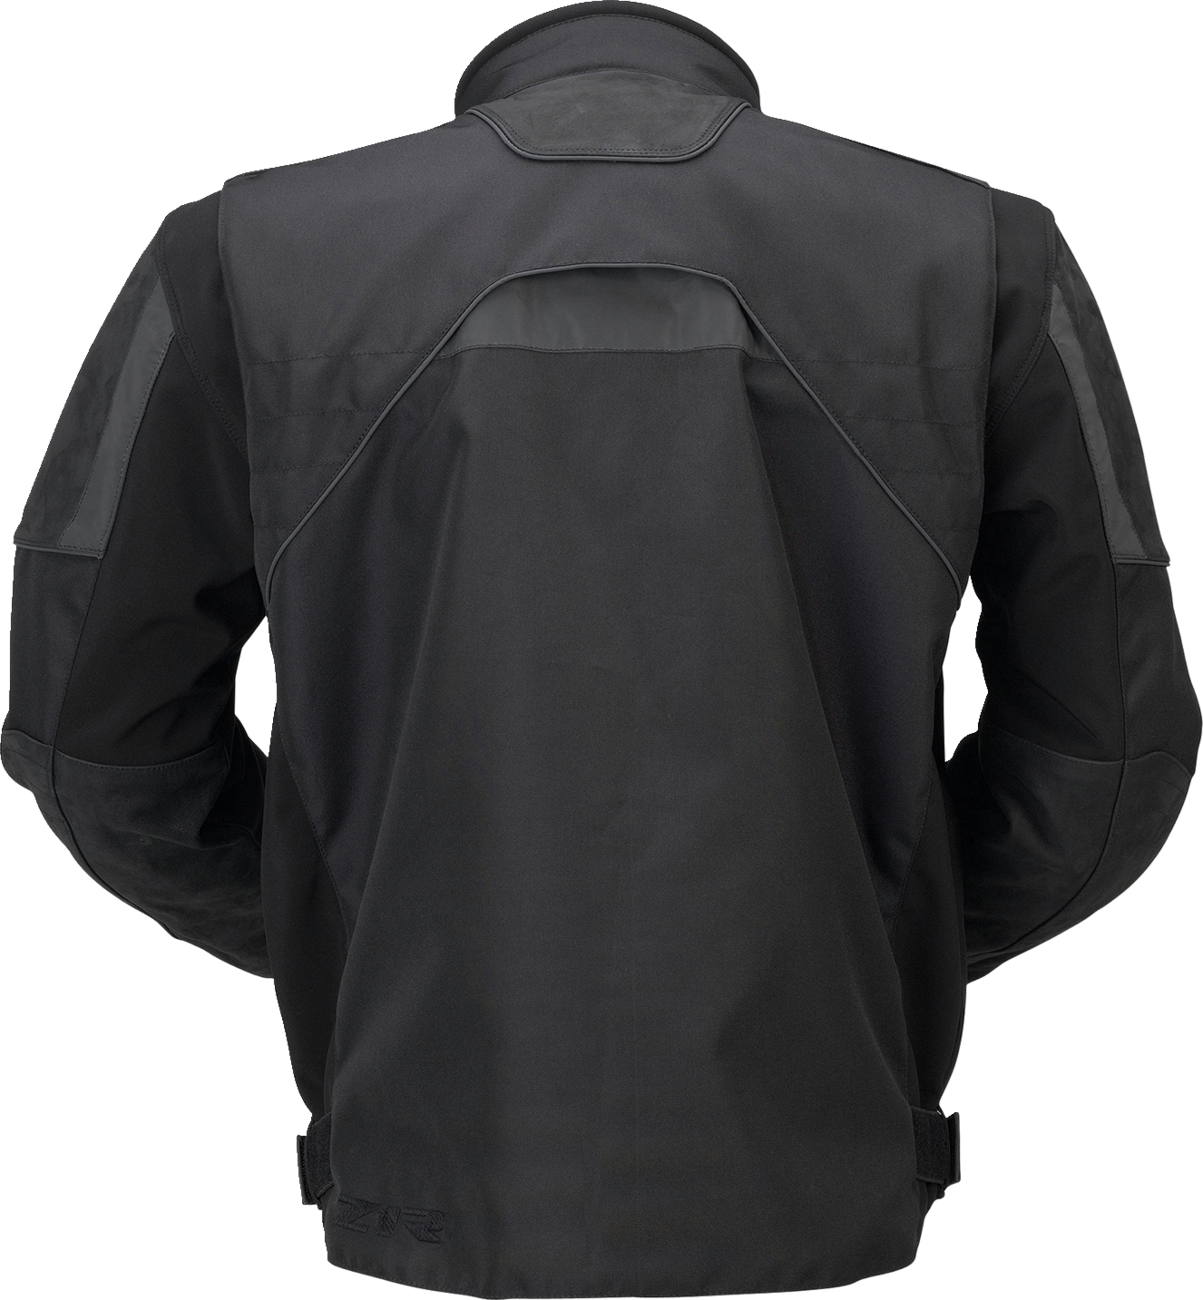 Z1R Reverance Jacket - Black - 5XL 2820-5790